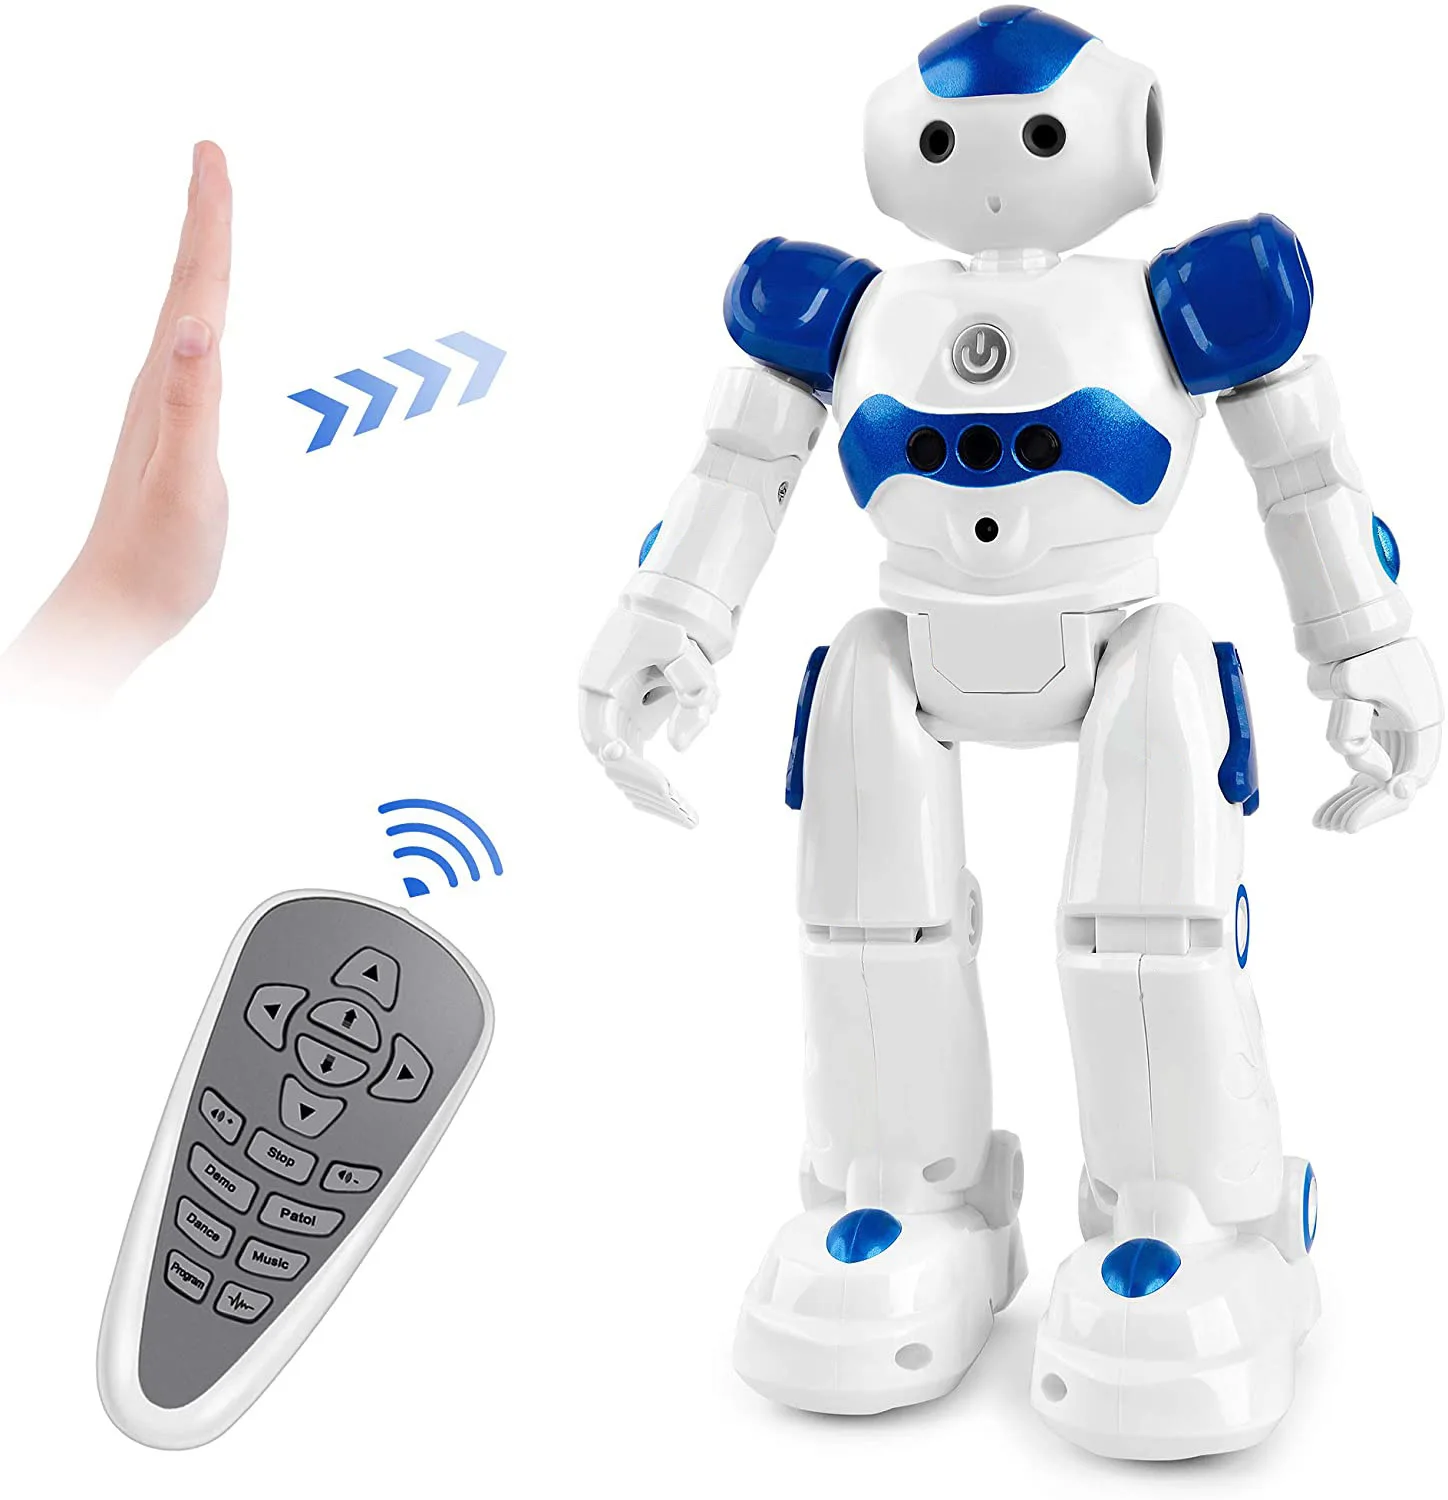 Robot Toy for Kids Smart Remote Control Robot Gesture Sensing Dancing Walking 